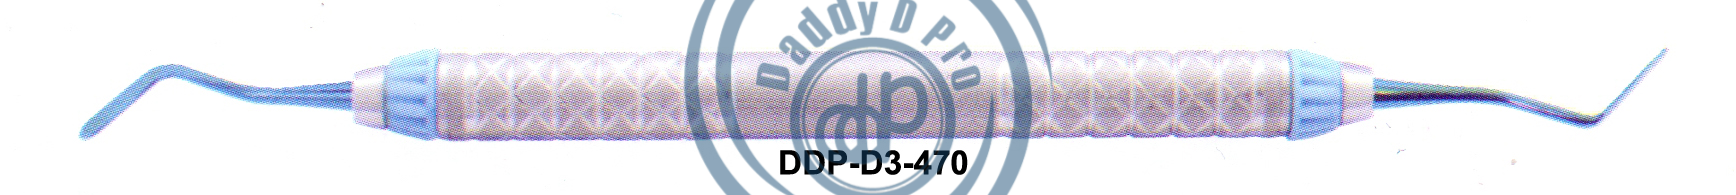 images/DDP-D3-470.png